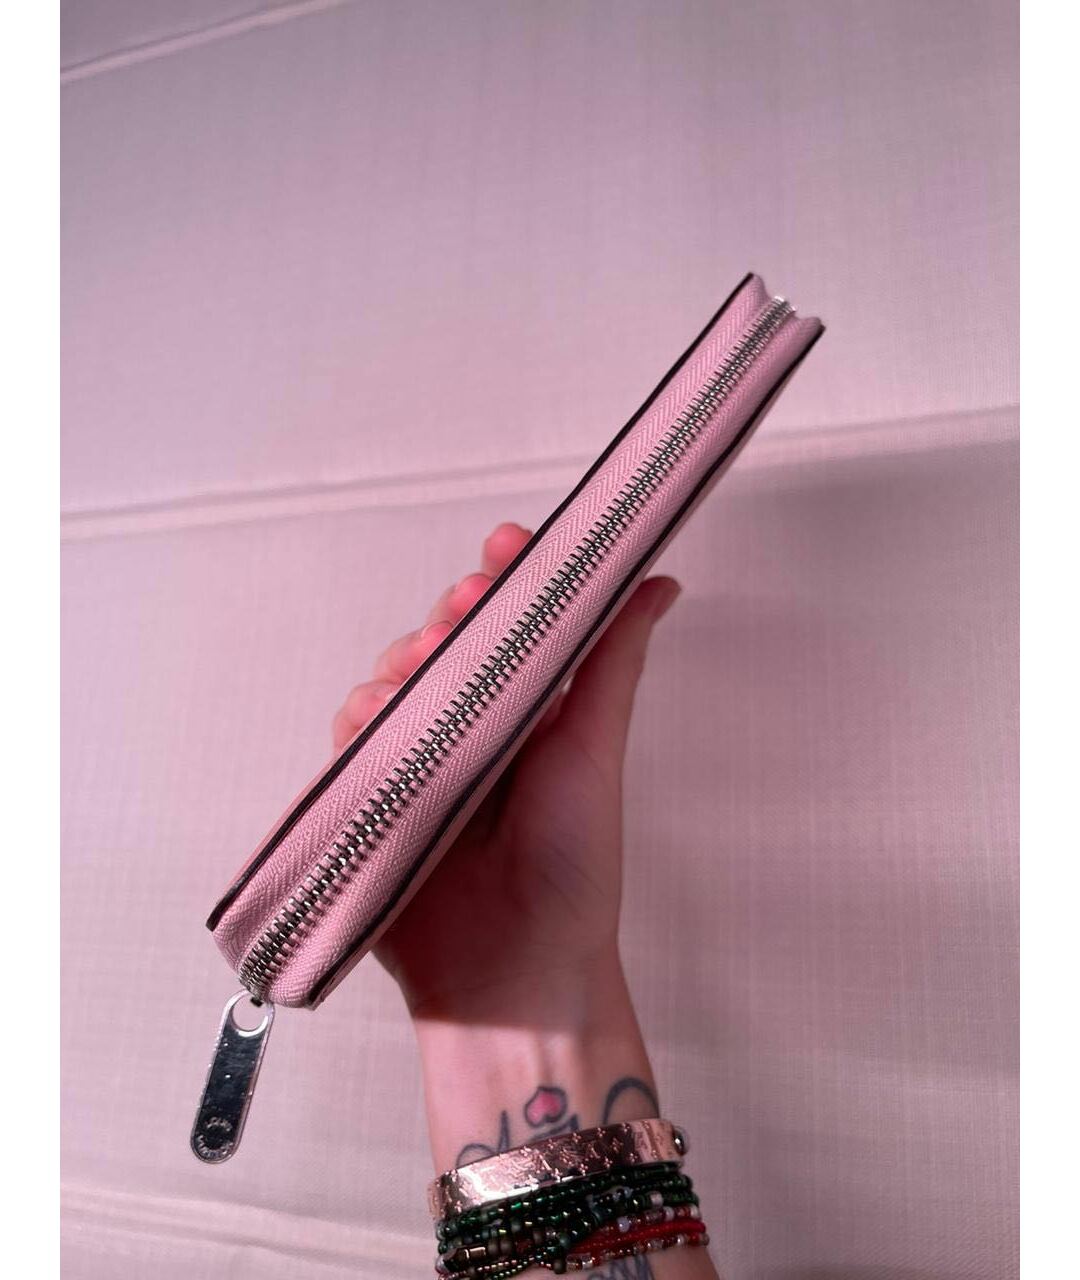 LOUIS VUITTON PRE-OWNED Розовый кожаный кошелек, фото 2